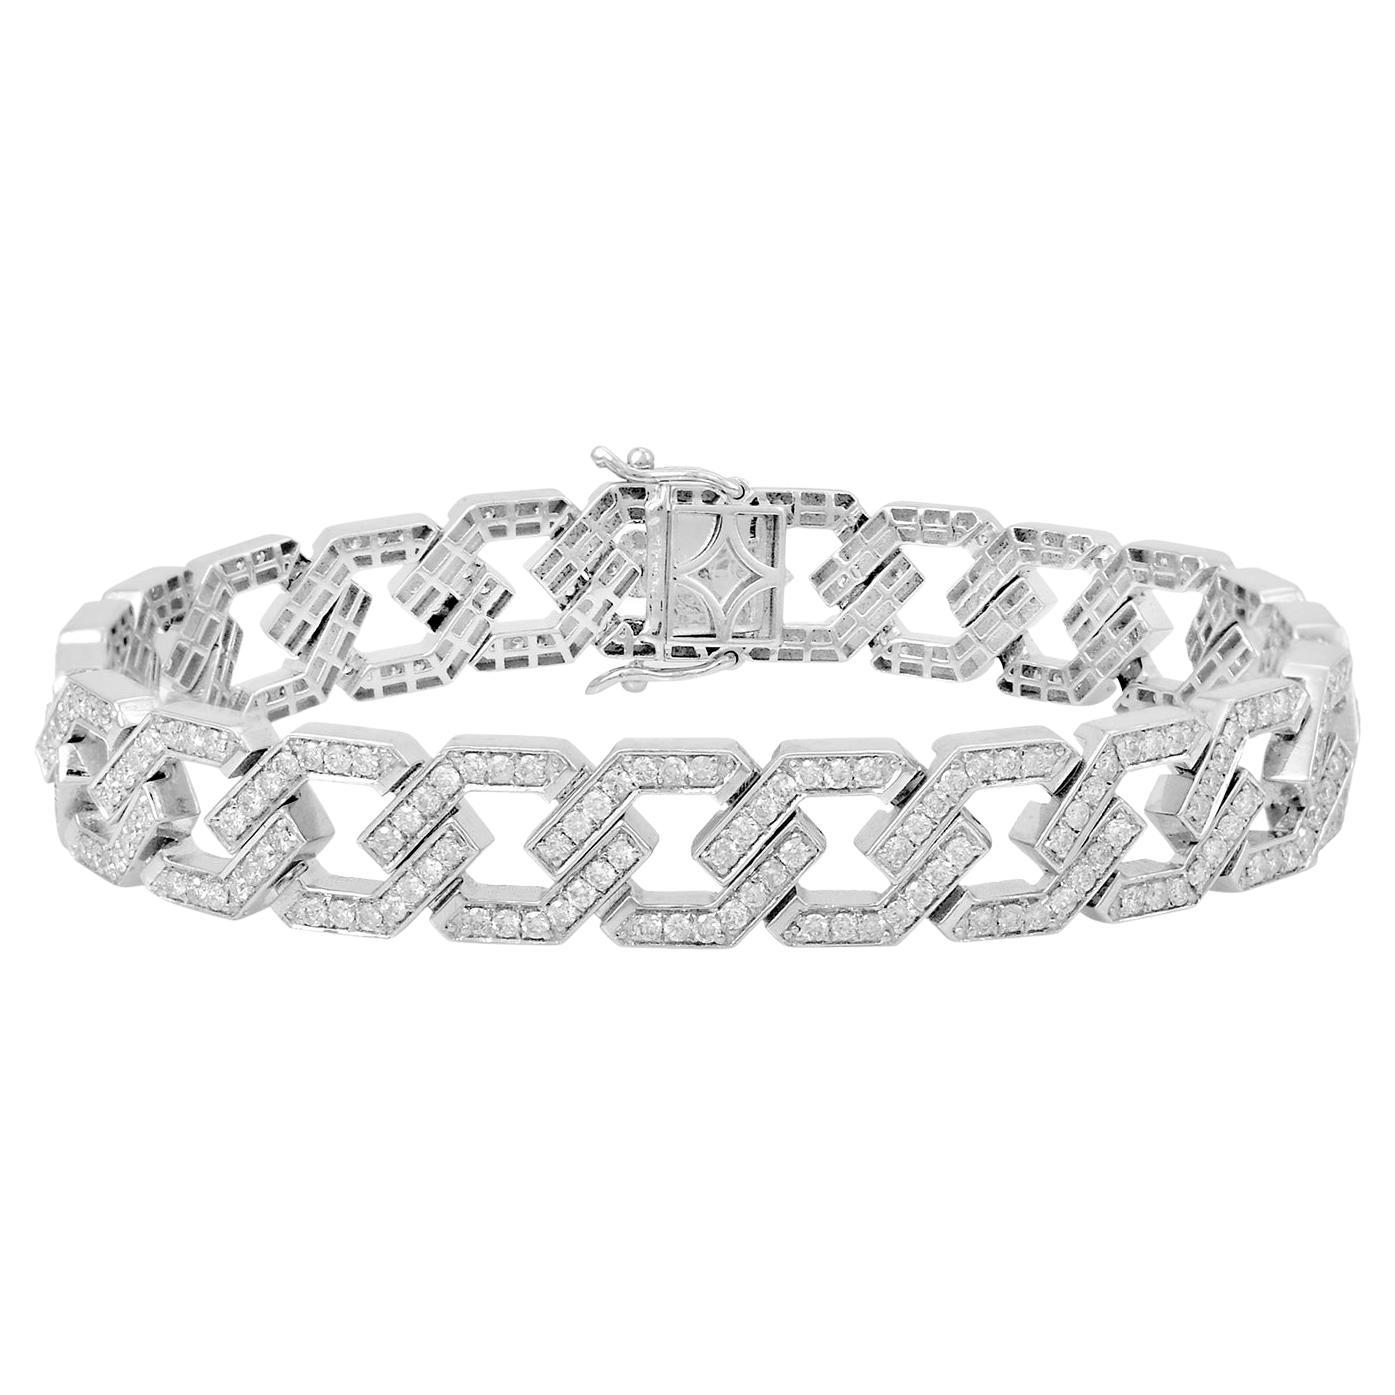 SI Clarity HI Color Diamond Designer Bracelet 18 Karat White Gold Fine Jewelry